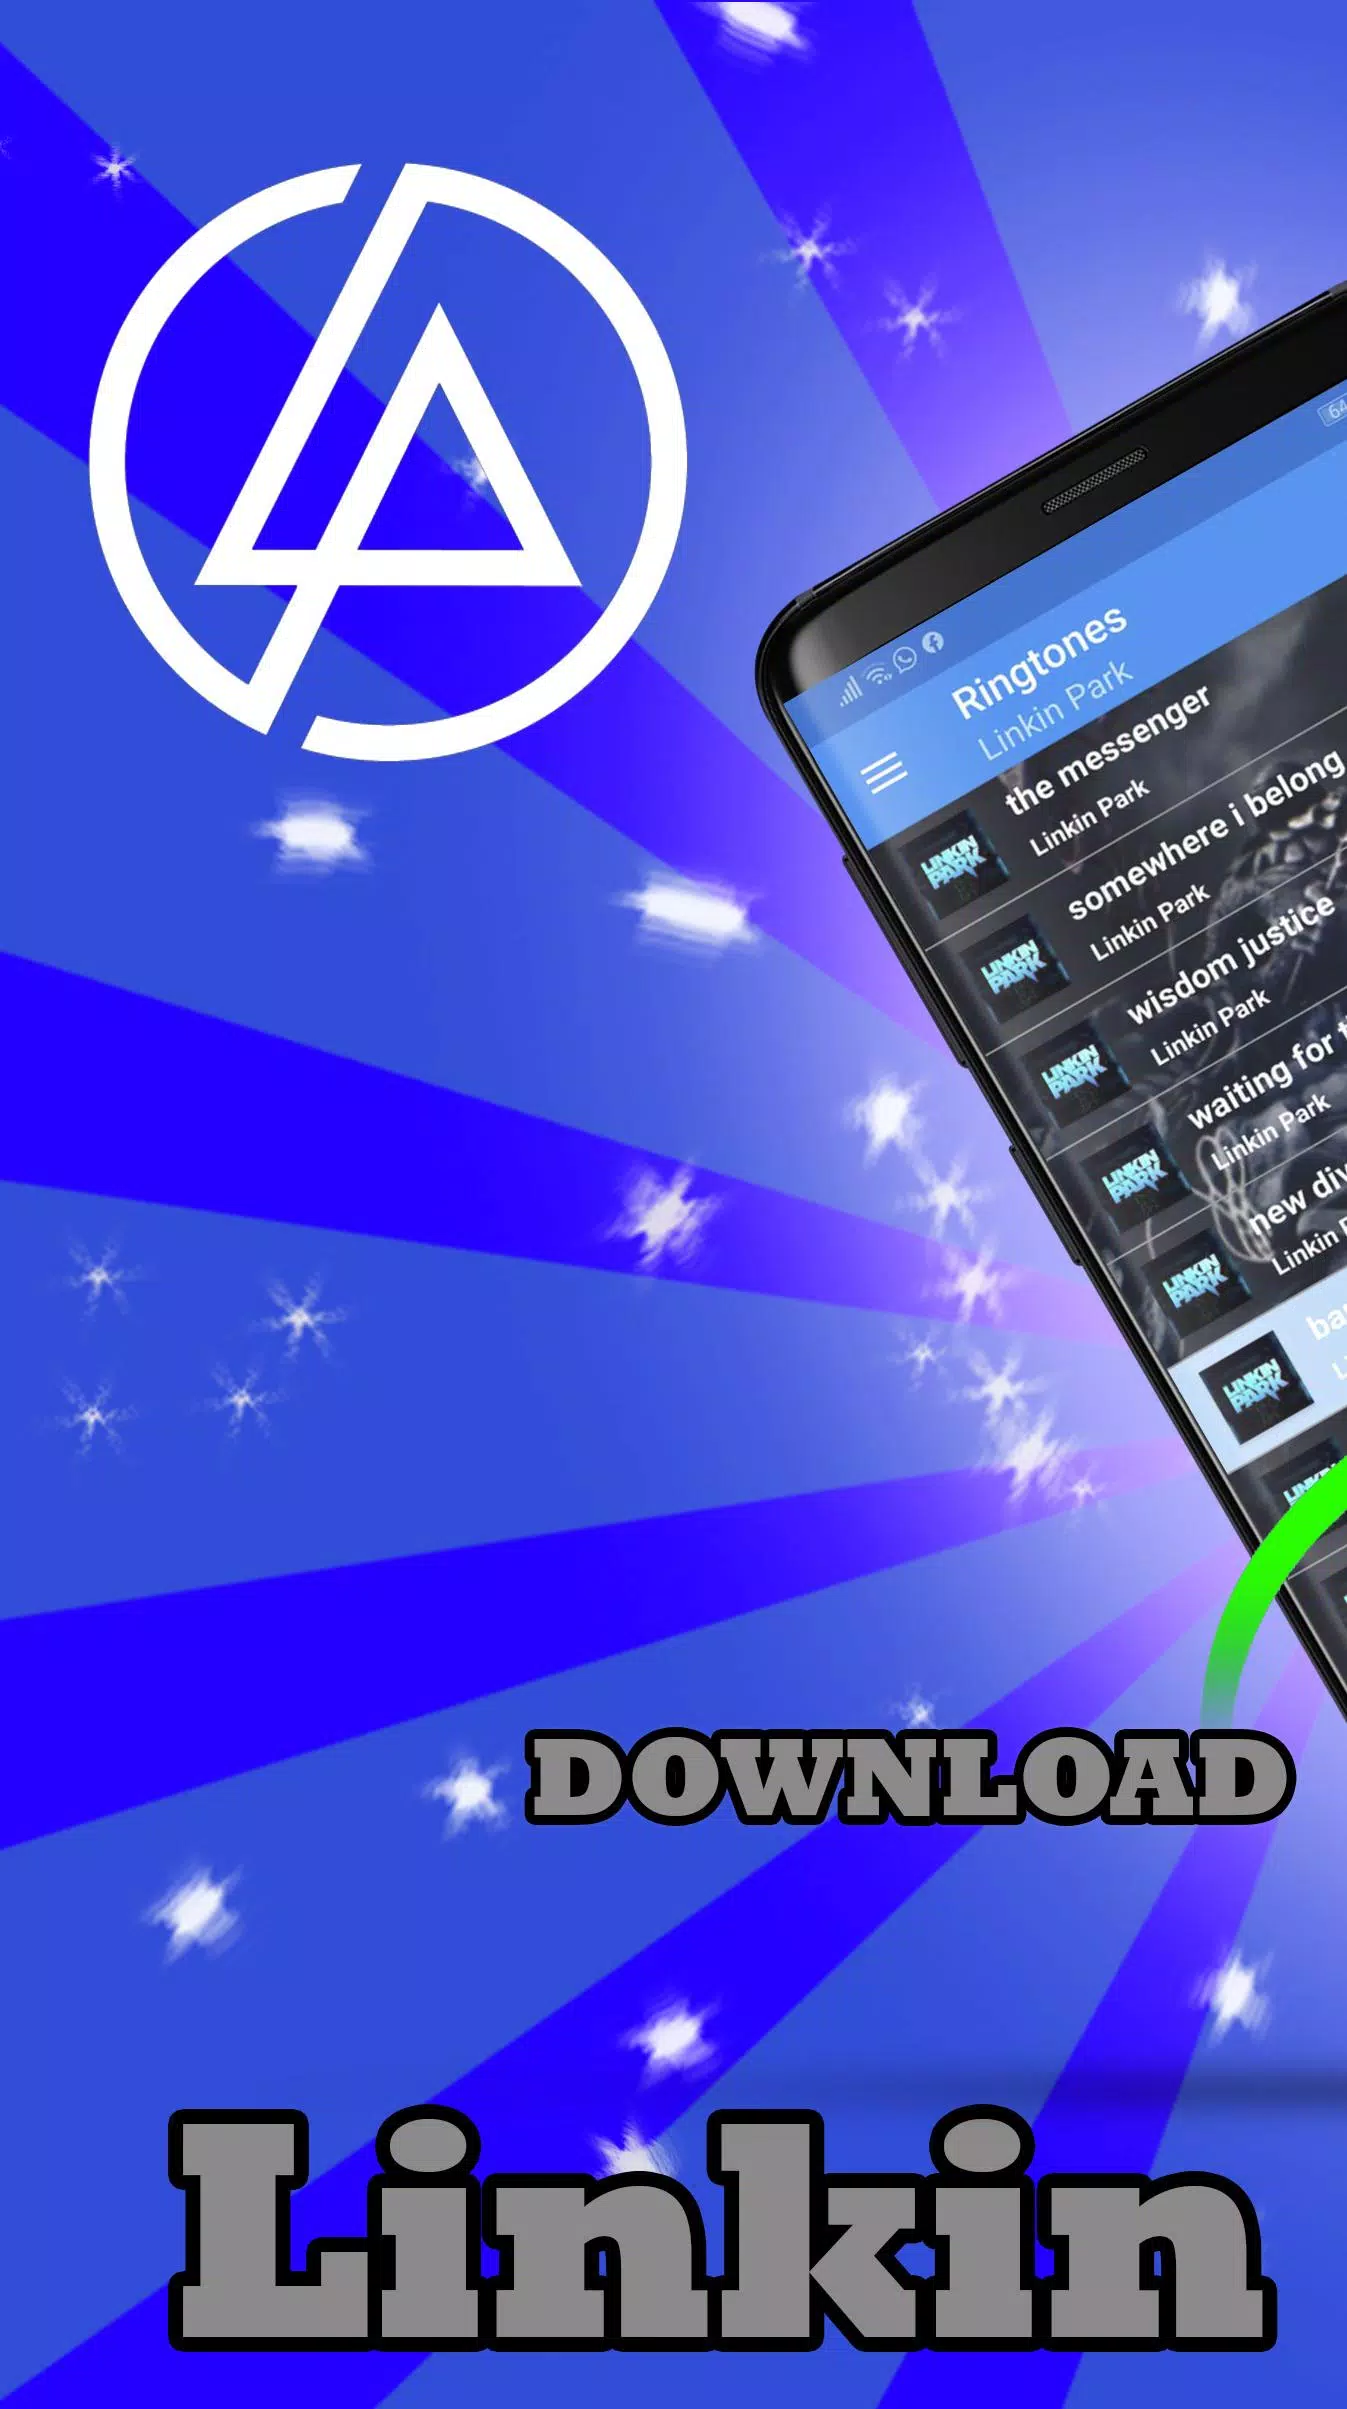 Descarga de APK de Ringtones Linkin Park para Android